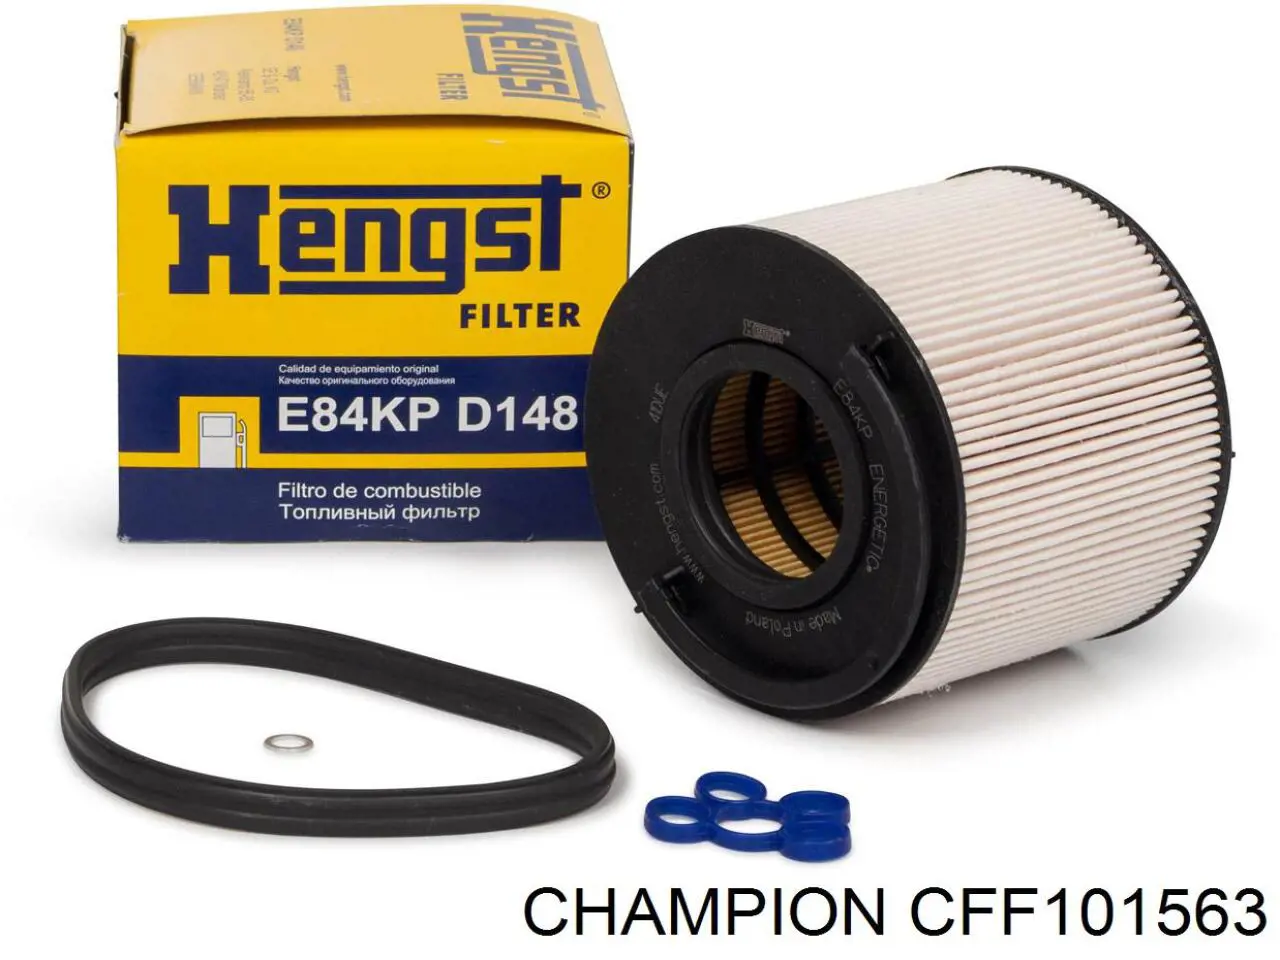 CFF101563 Champion filtro combustible